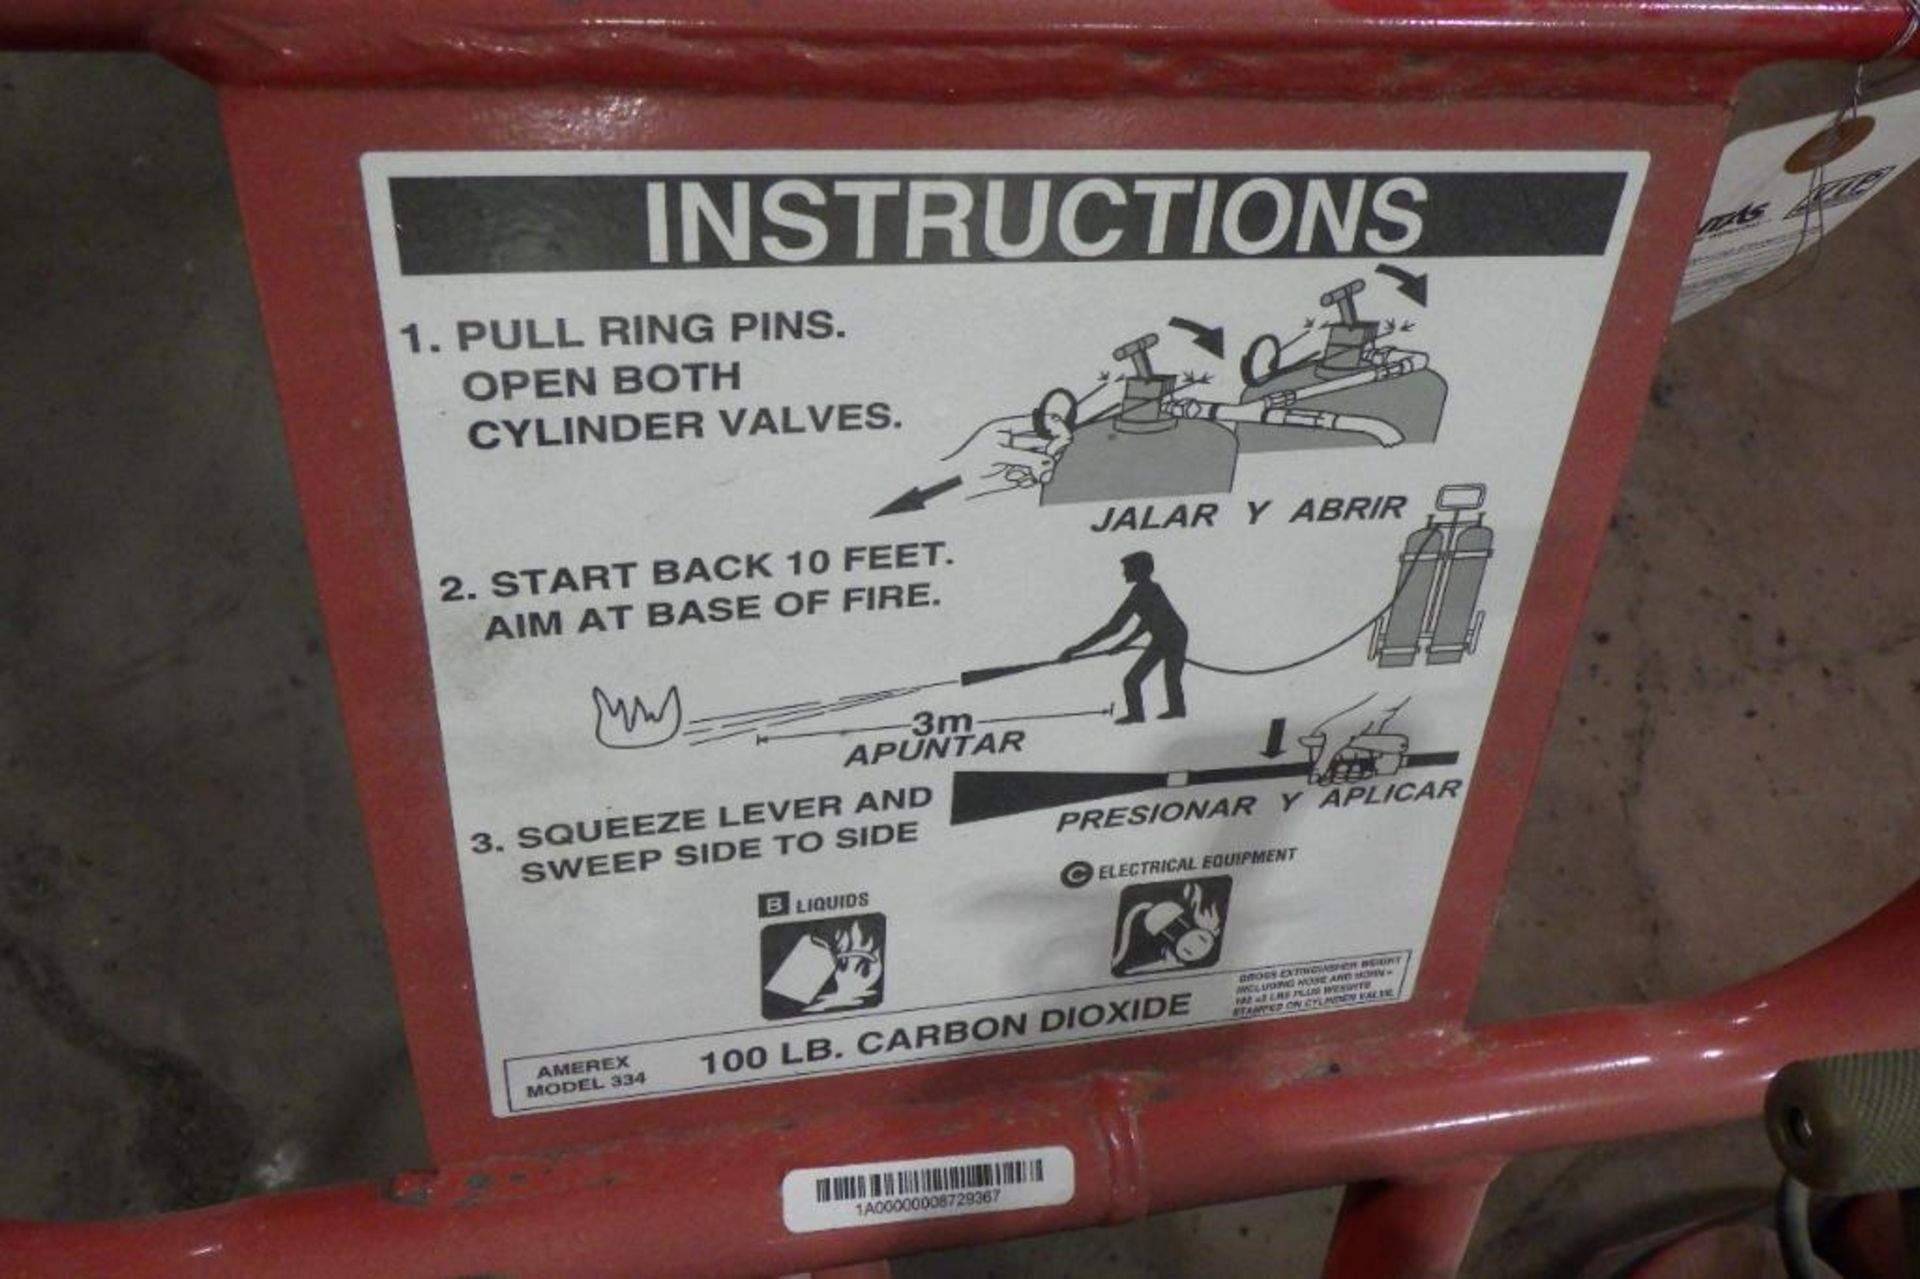 Cintas fire extinguisher carts - Image 4 of 8